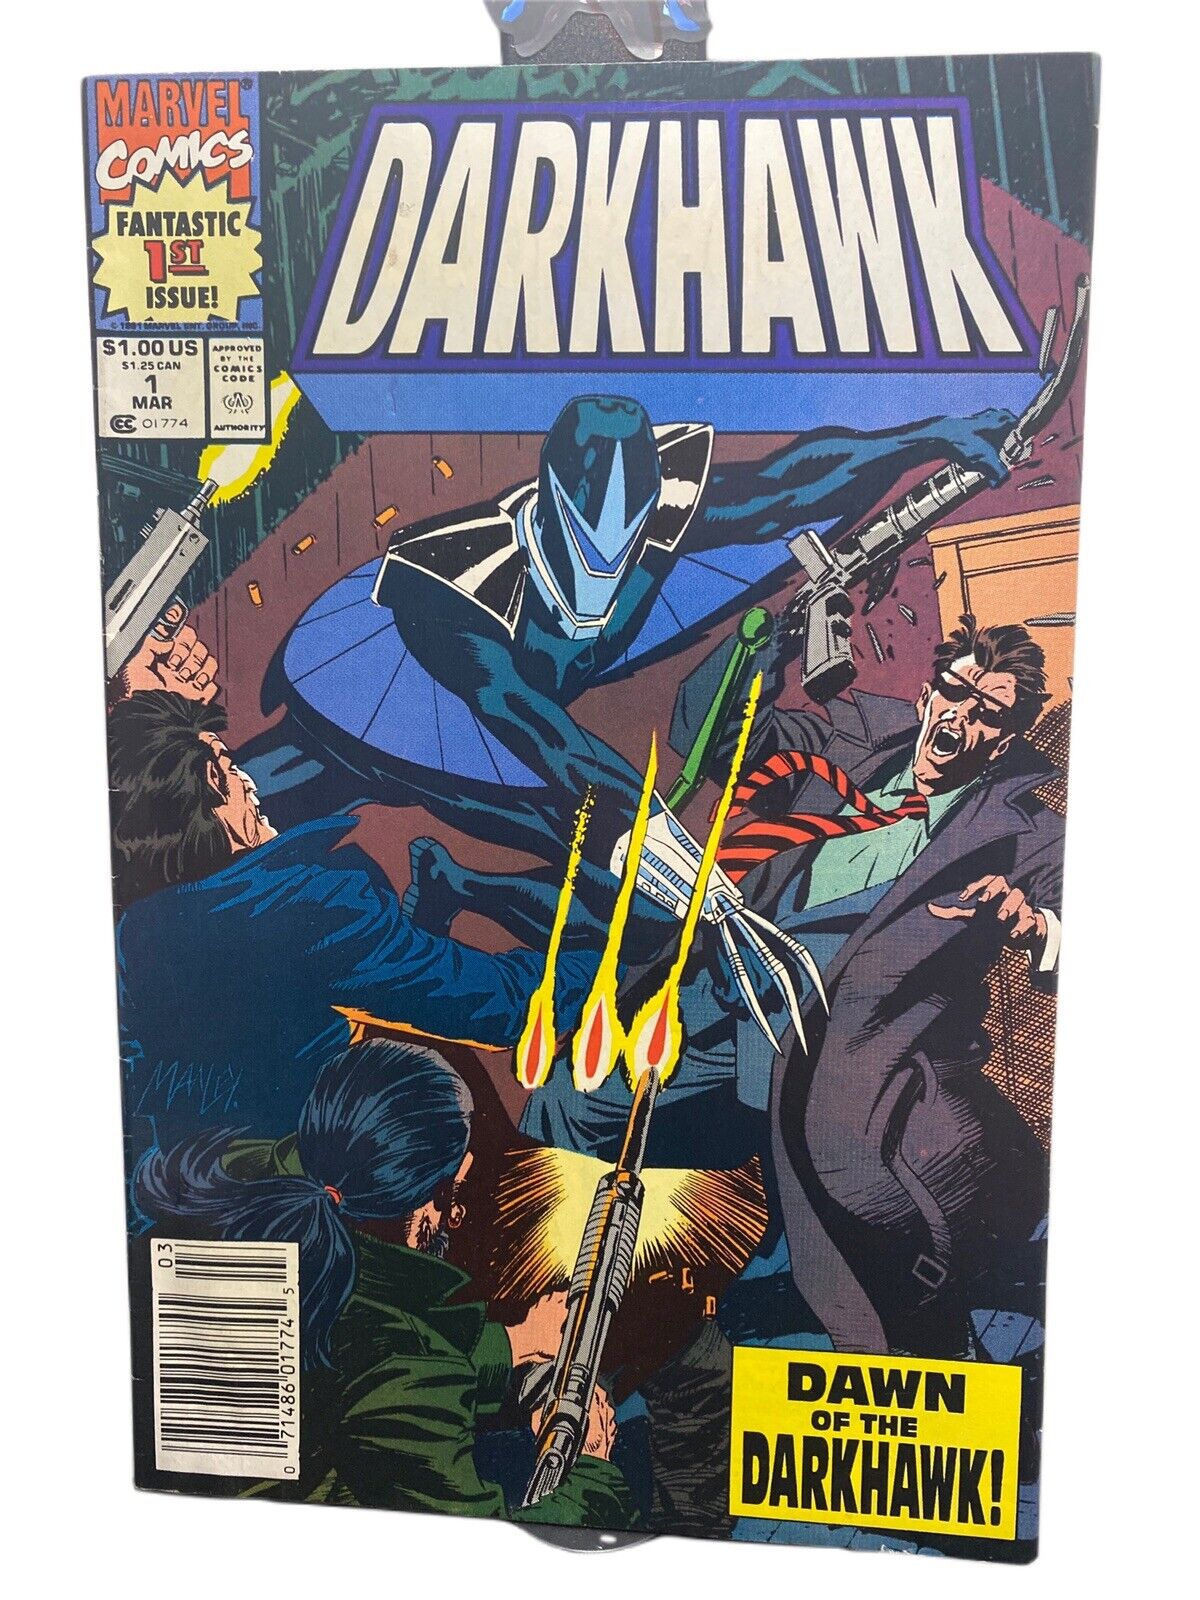 Darkhawk #1 (Mar 1991, Marvel)